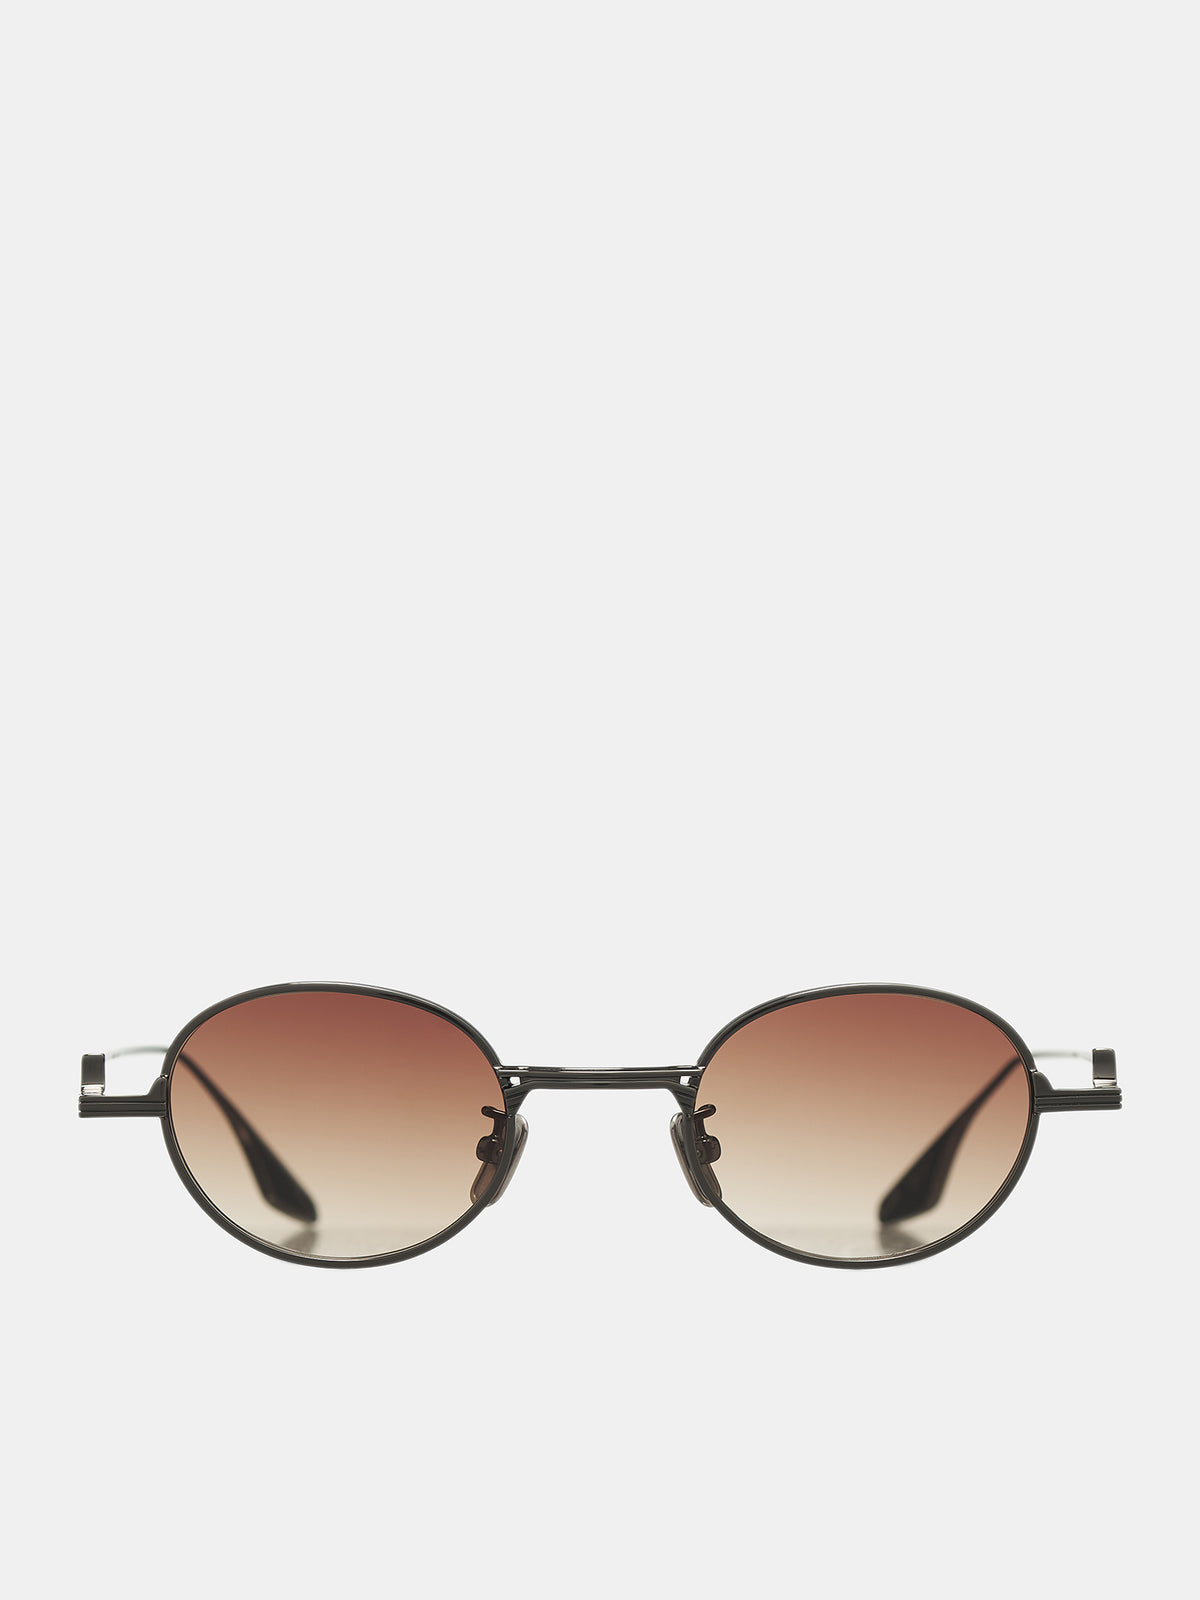 DISTRICT PEOPLE Sanbang 004 Sunglasses | H. Lorenzo - front